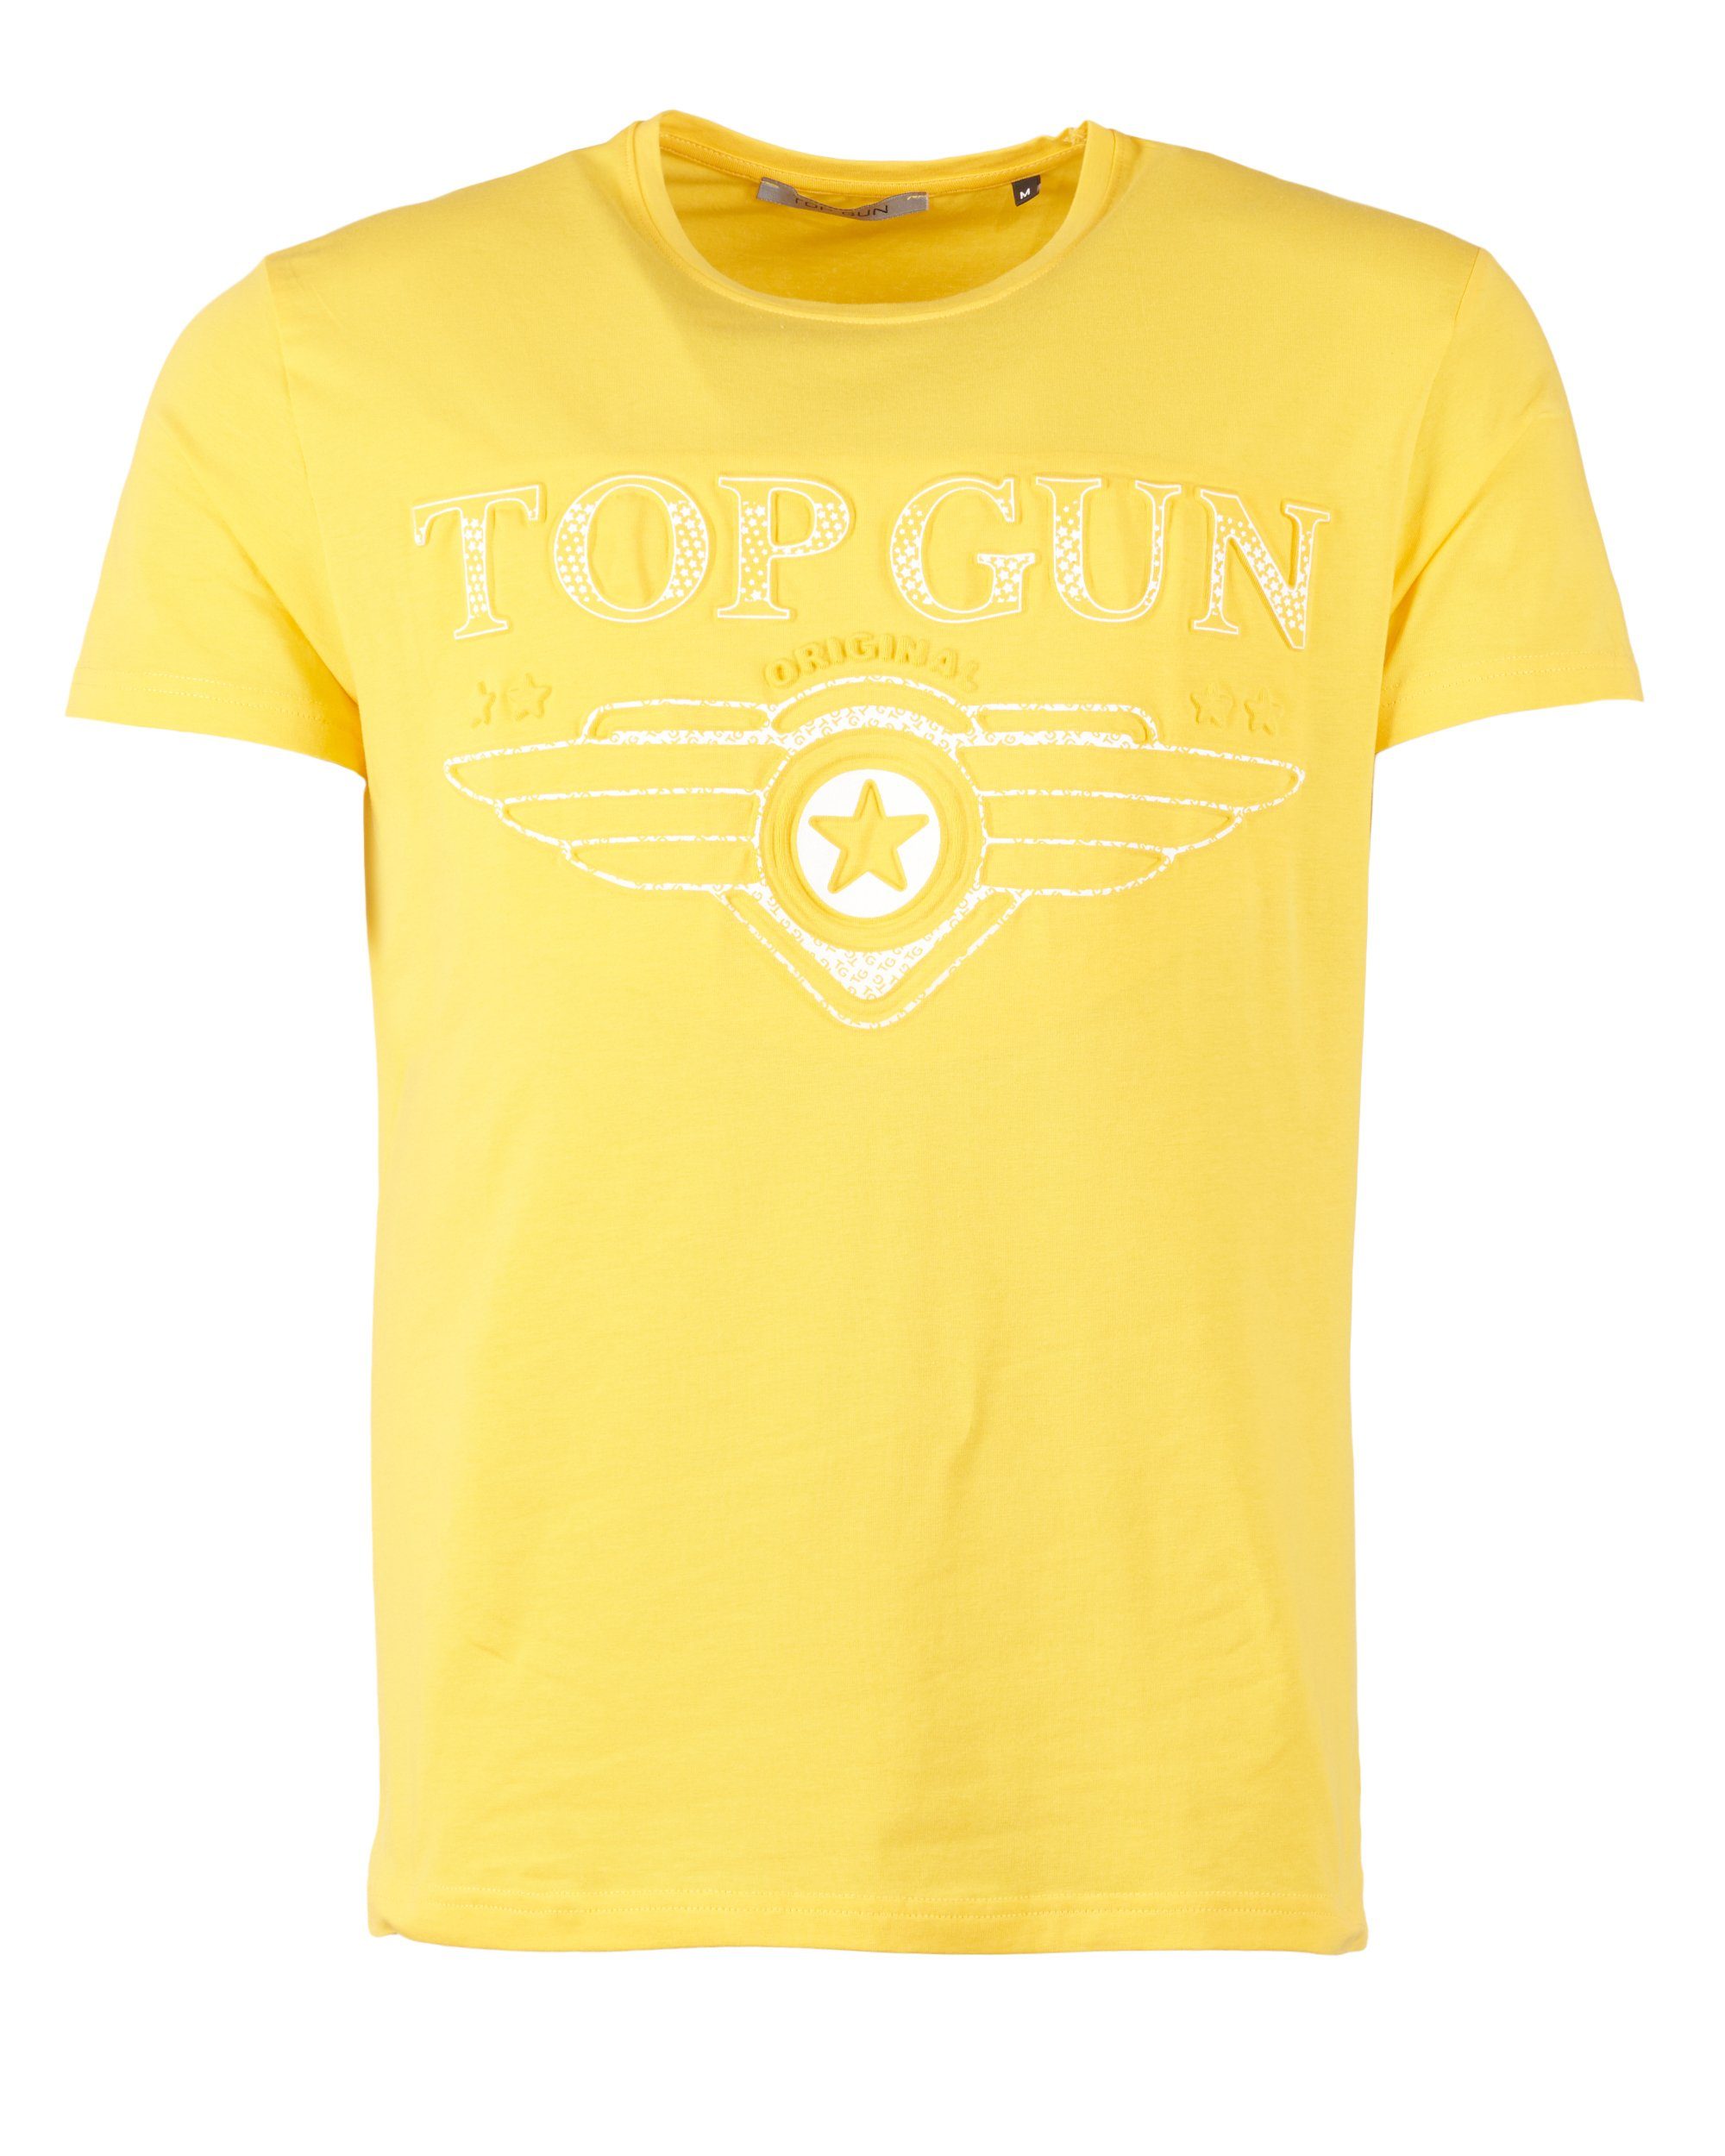 T-Shirt GUN TG20193018 Bling yellow TOP